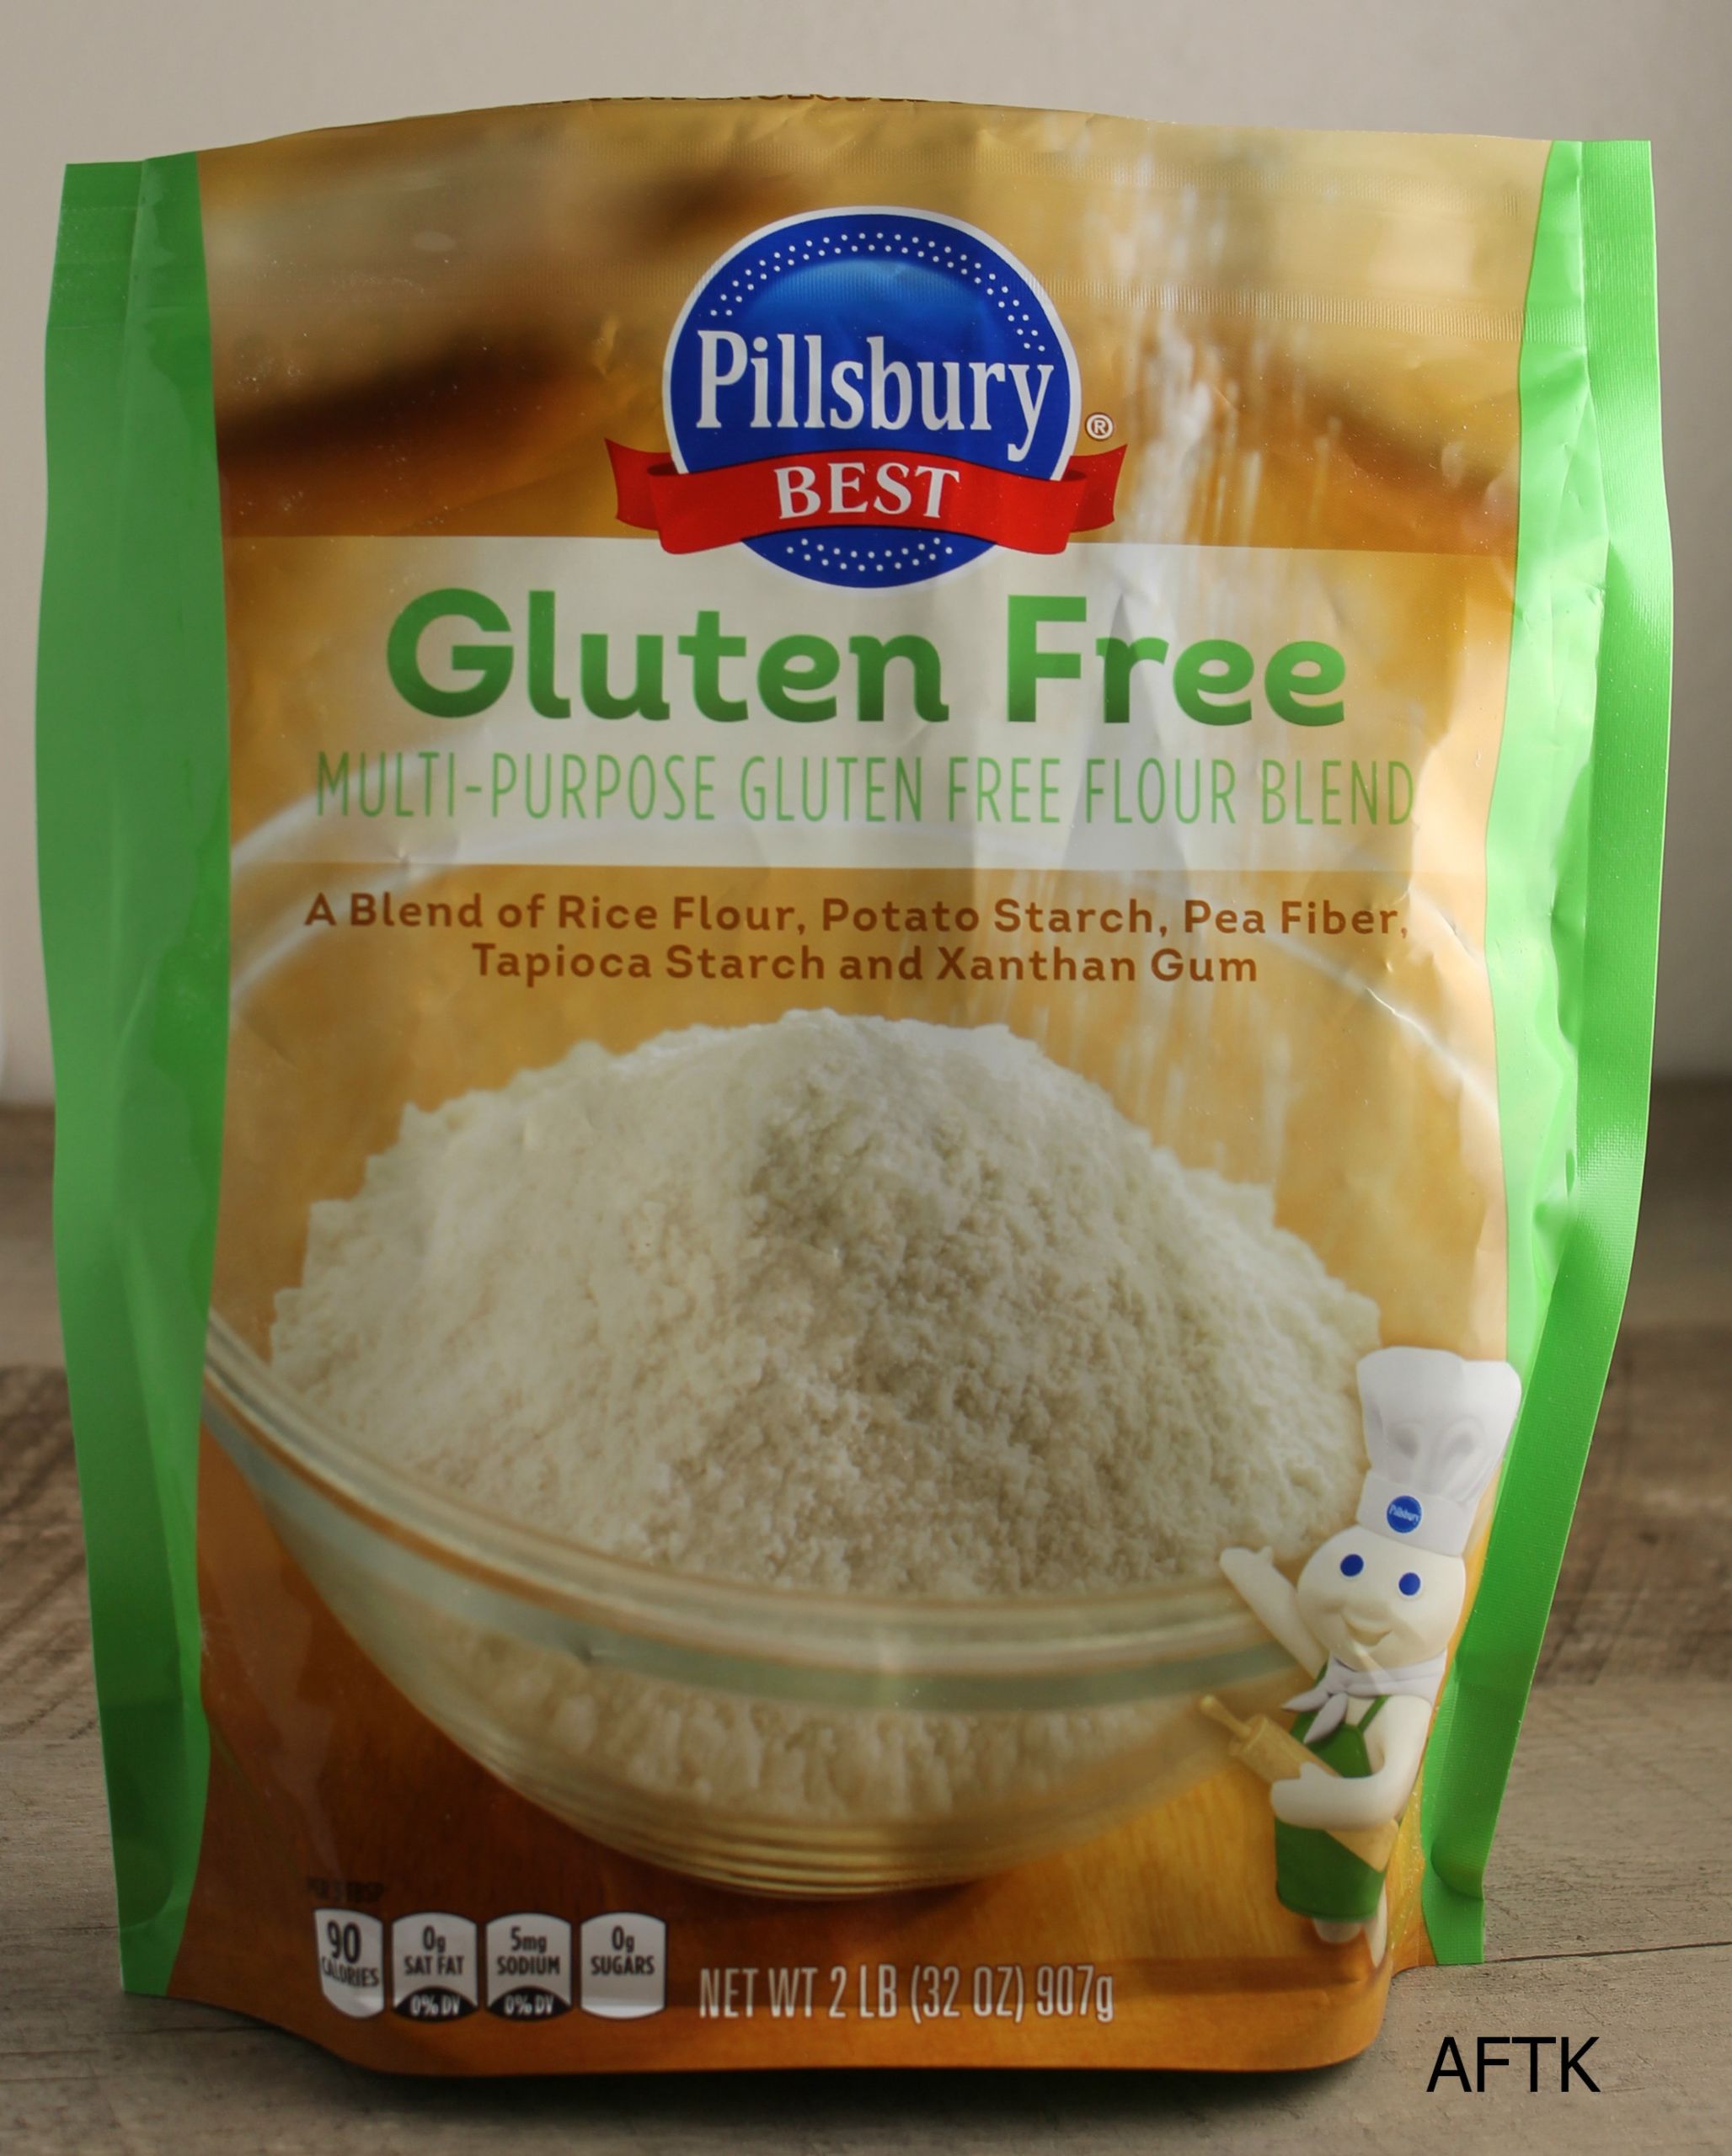 Pillsbury Gluten Free Flour Recipes
 Pillsbury Gluten Free Multi Purpose Gluten Free Flour